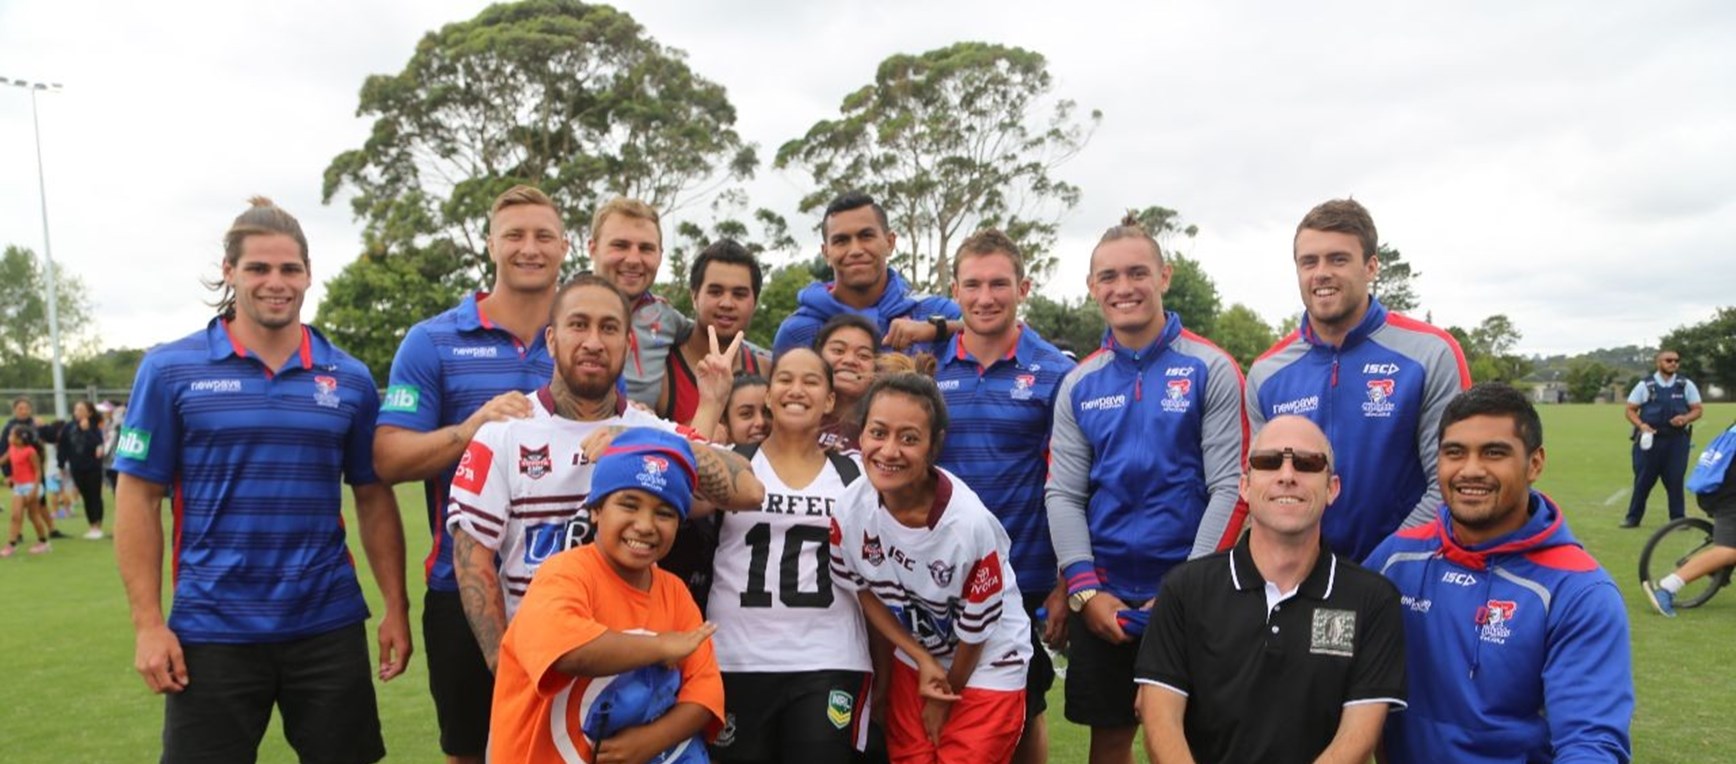 Gallery: Knights' NZ junior club visit